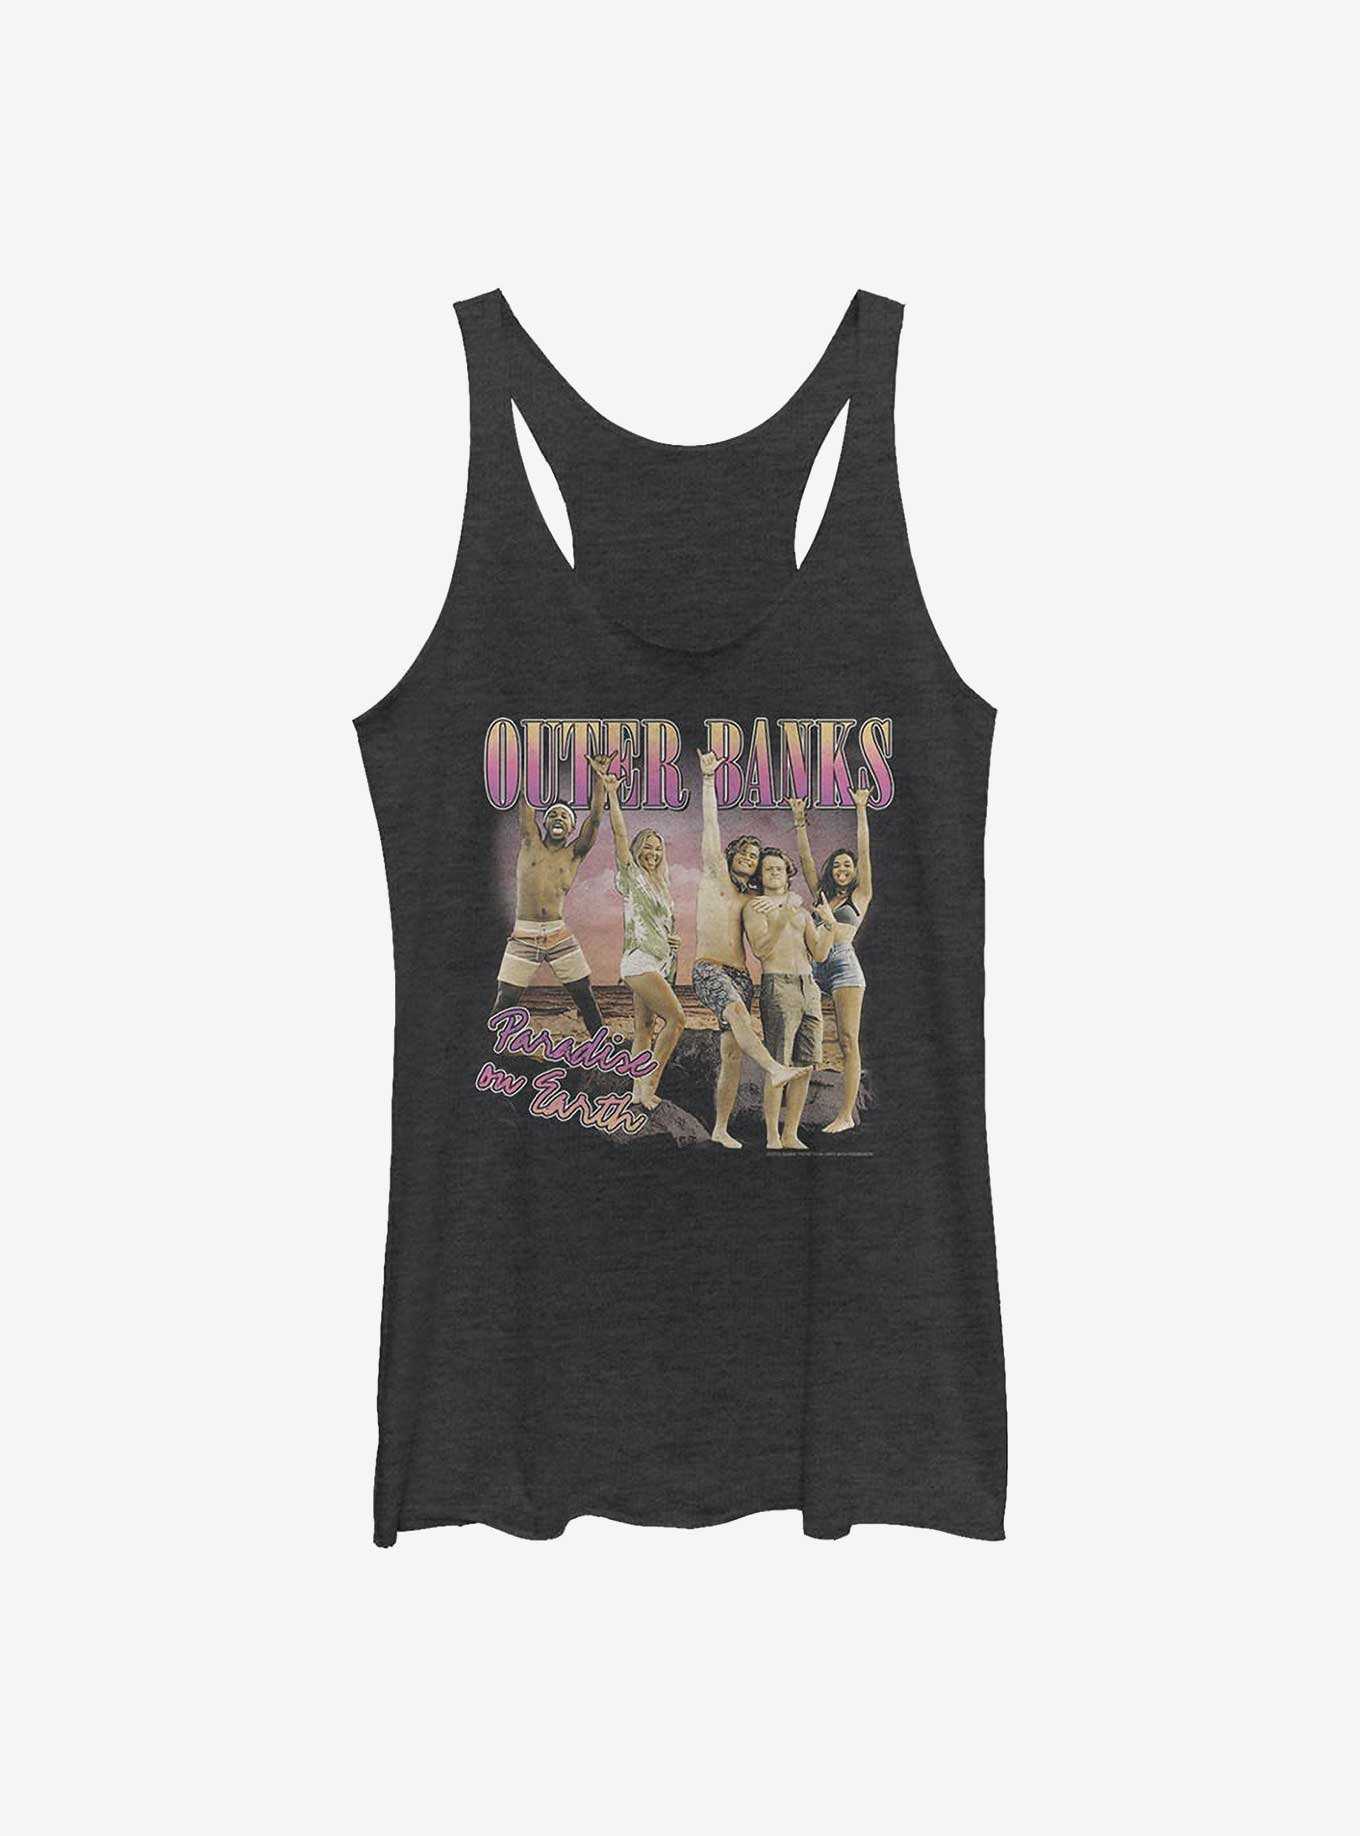 Outer Banks Pogue Squad Girls Tank, , hi-res